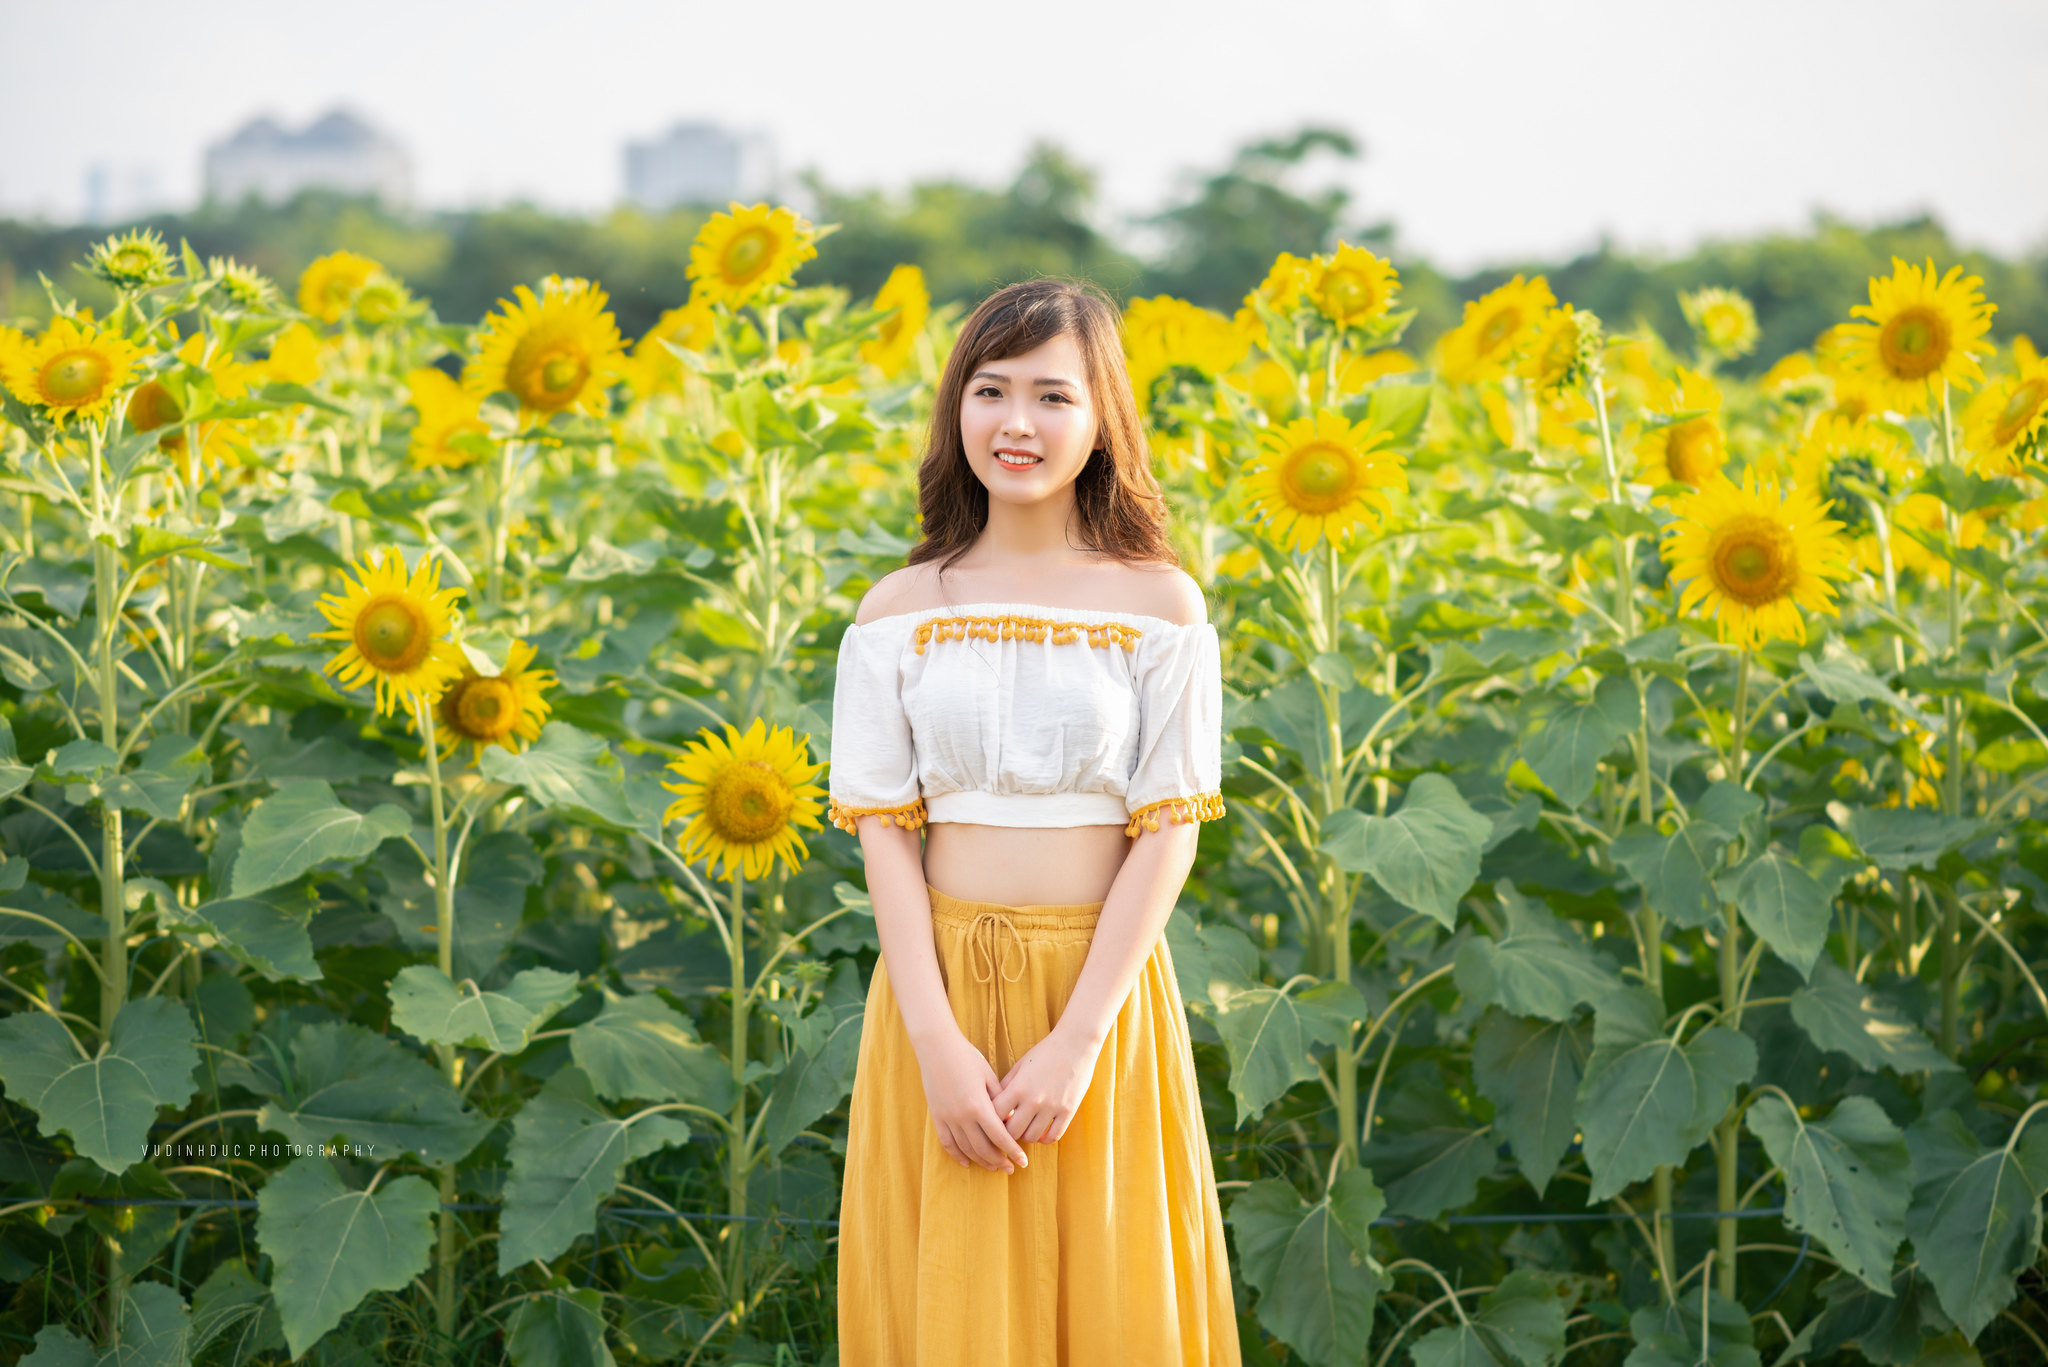 People 2048x1367 women Vietnamese Asian depth of field yellow dress sunflowers model brunette bare midriff women outdoors